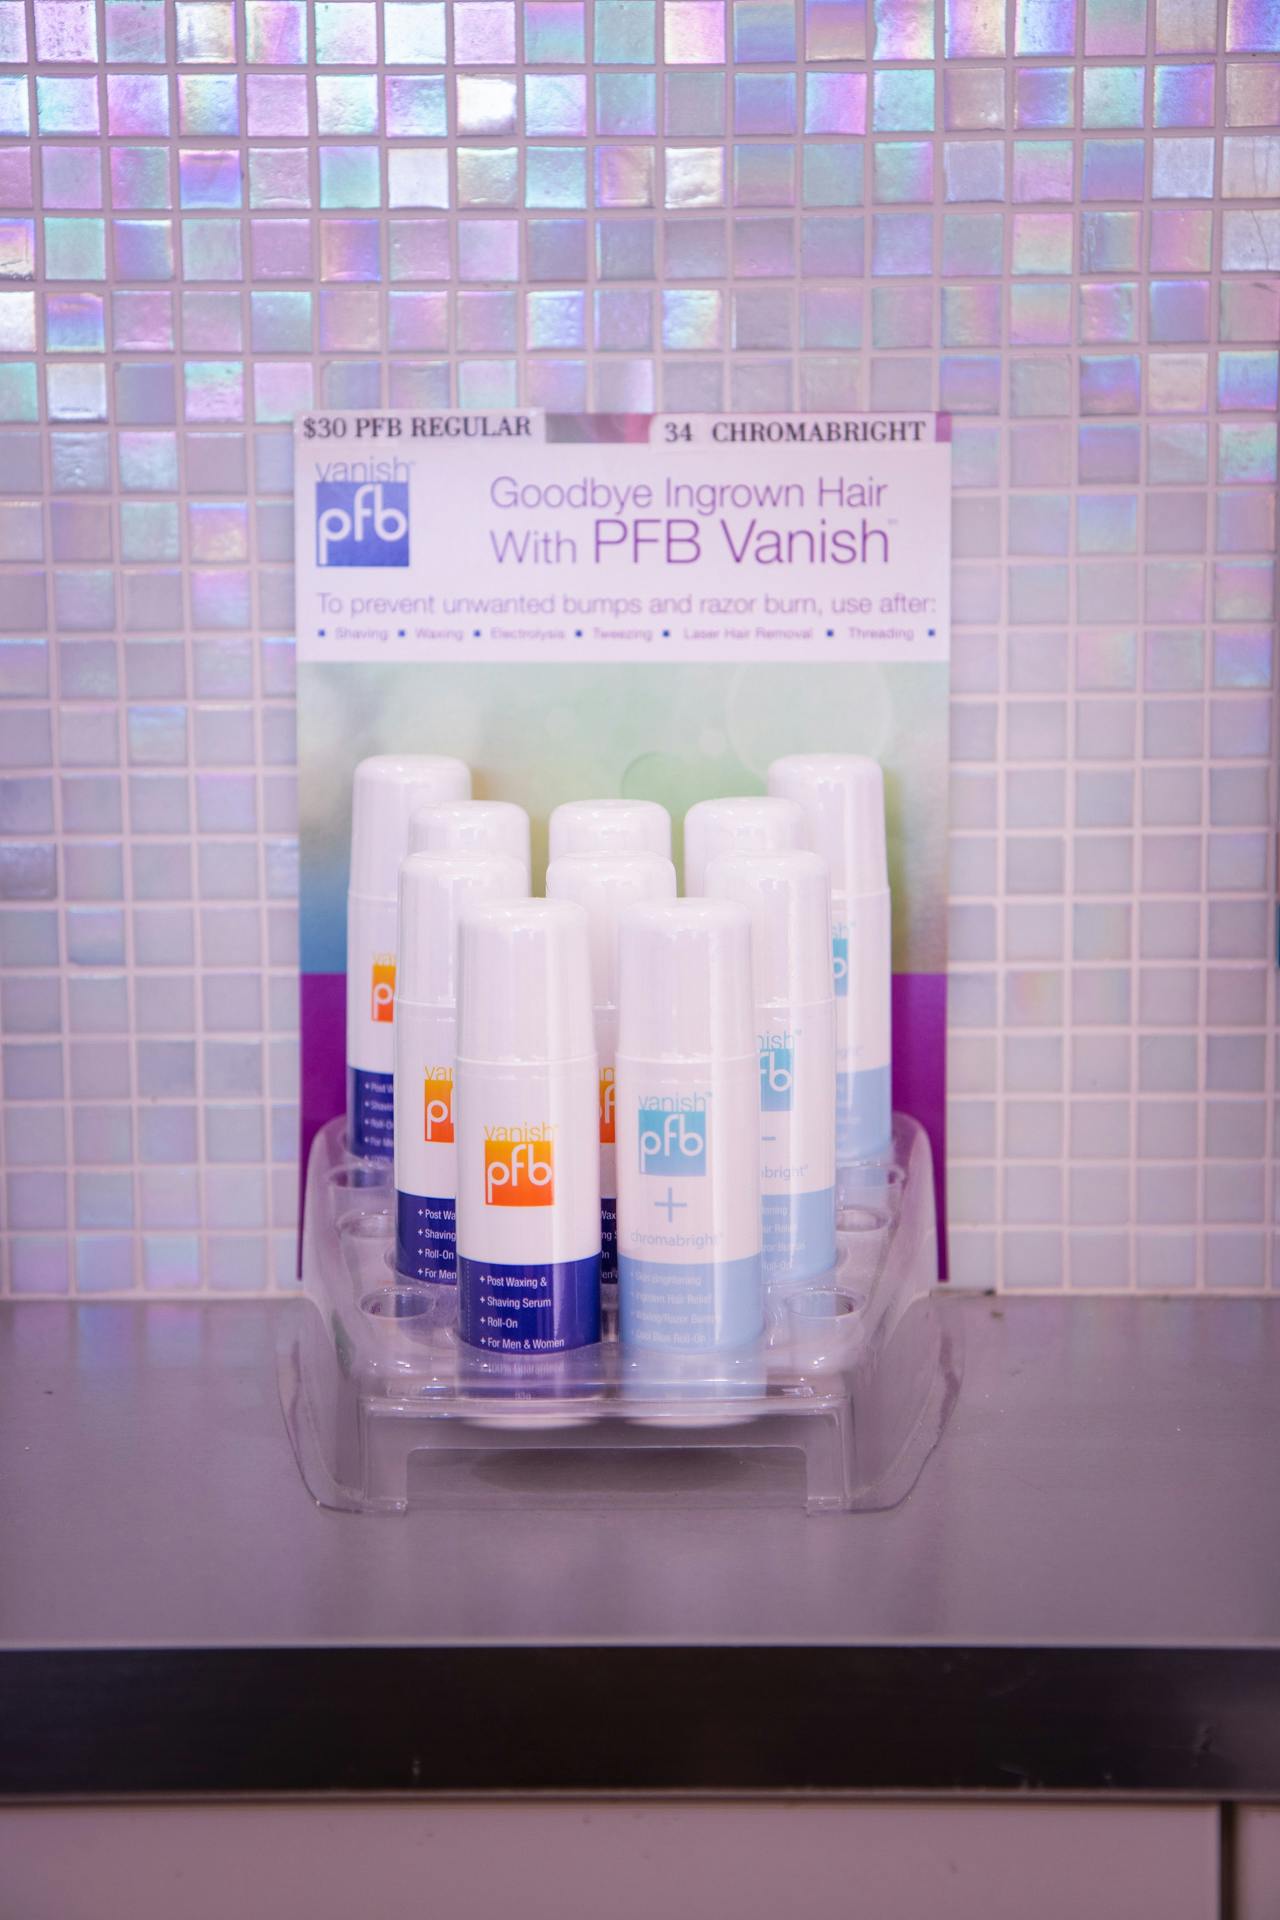 PFB Vanish Chromabright to treat ingrowns on the display counter.